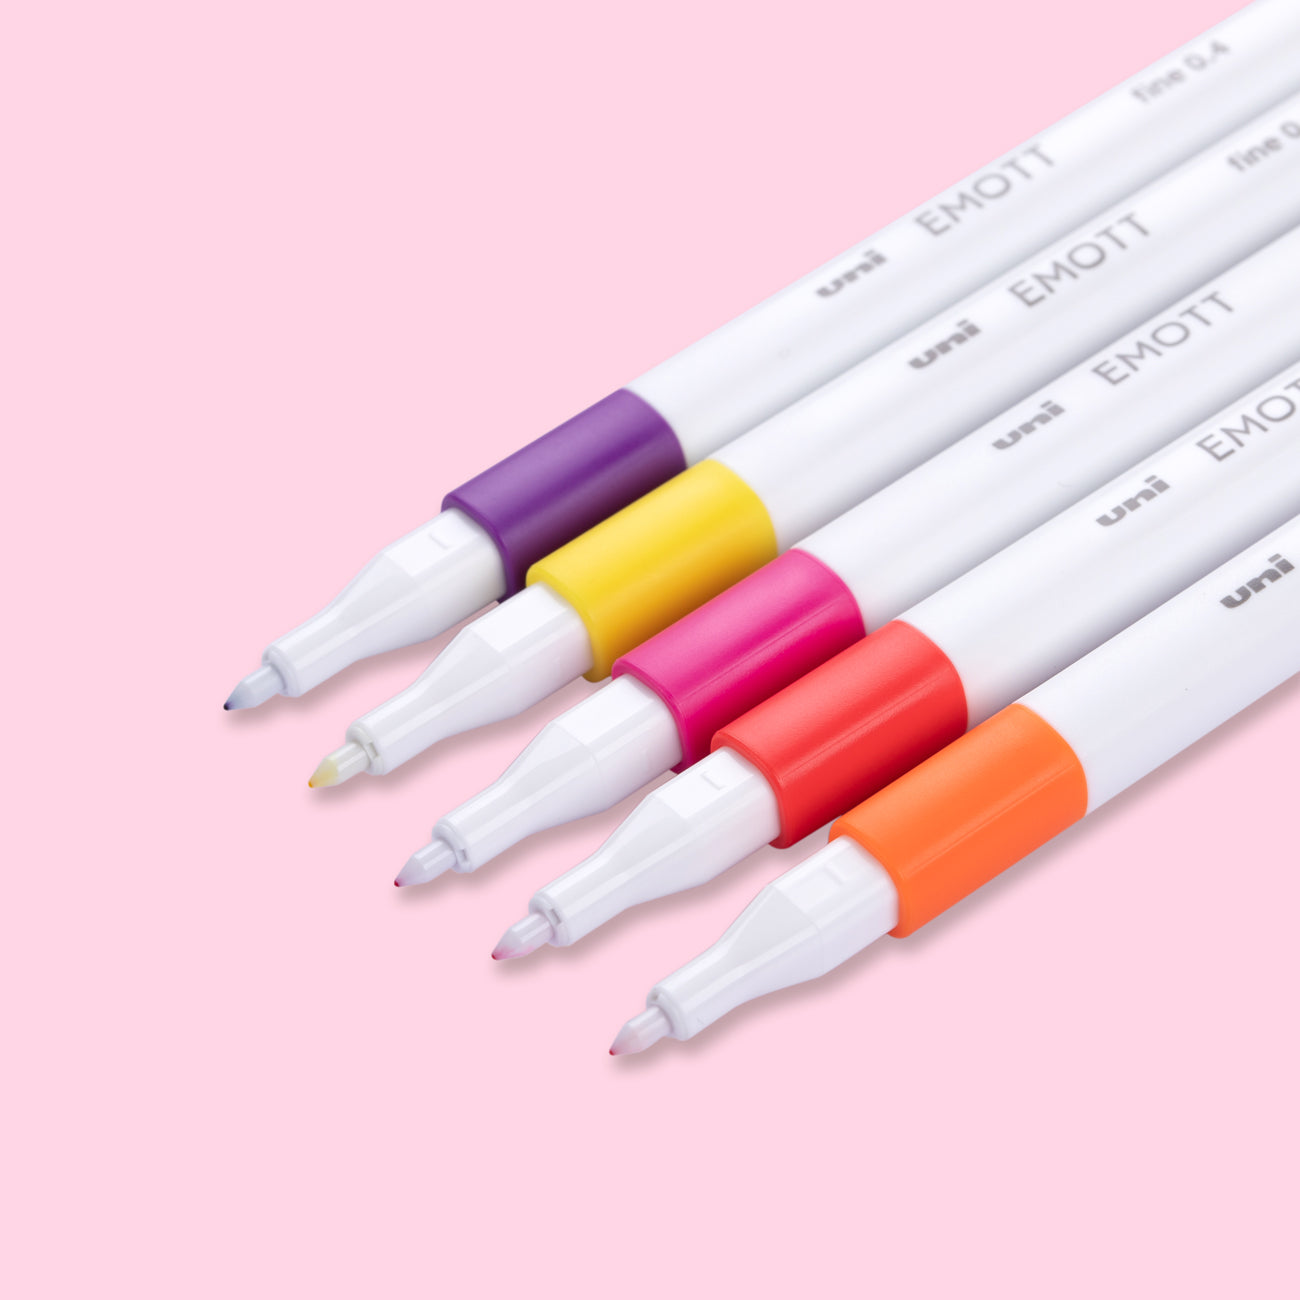 24 Color No Bleed Through Pens Markers Set 0.4 mm Fine Line